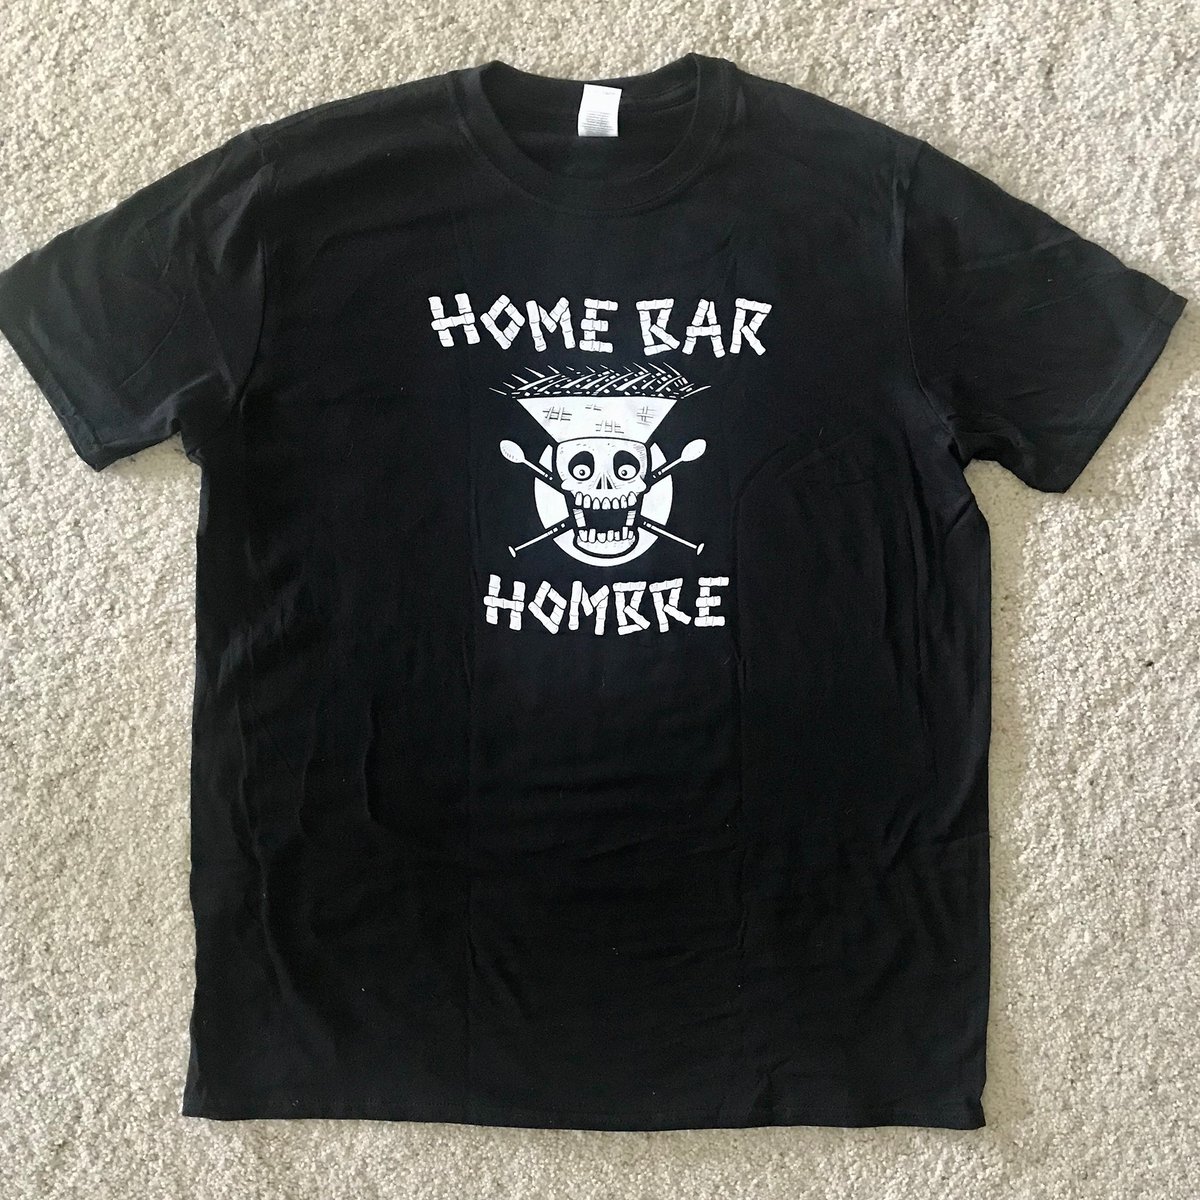 HOME BAR HOMBRE Men's T-Shirt